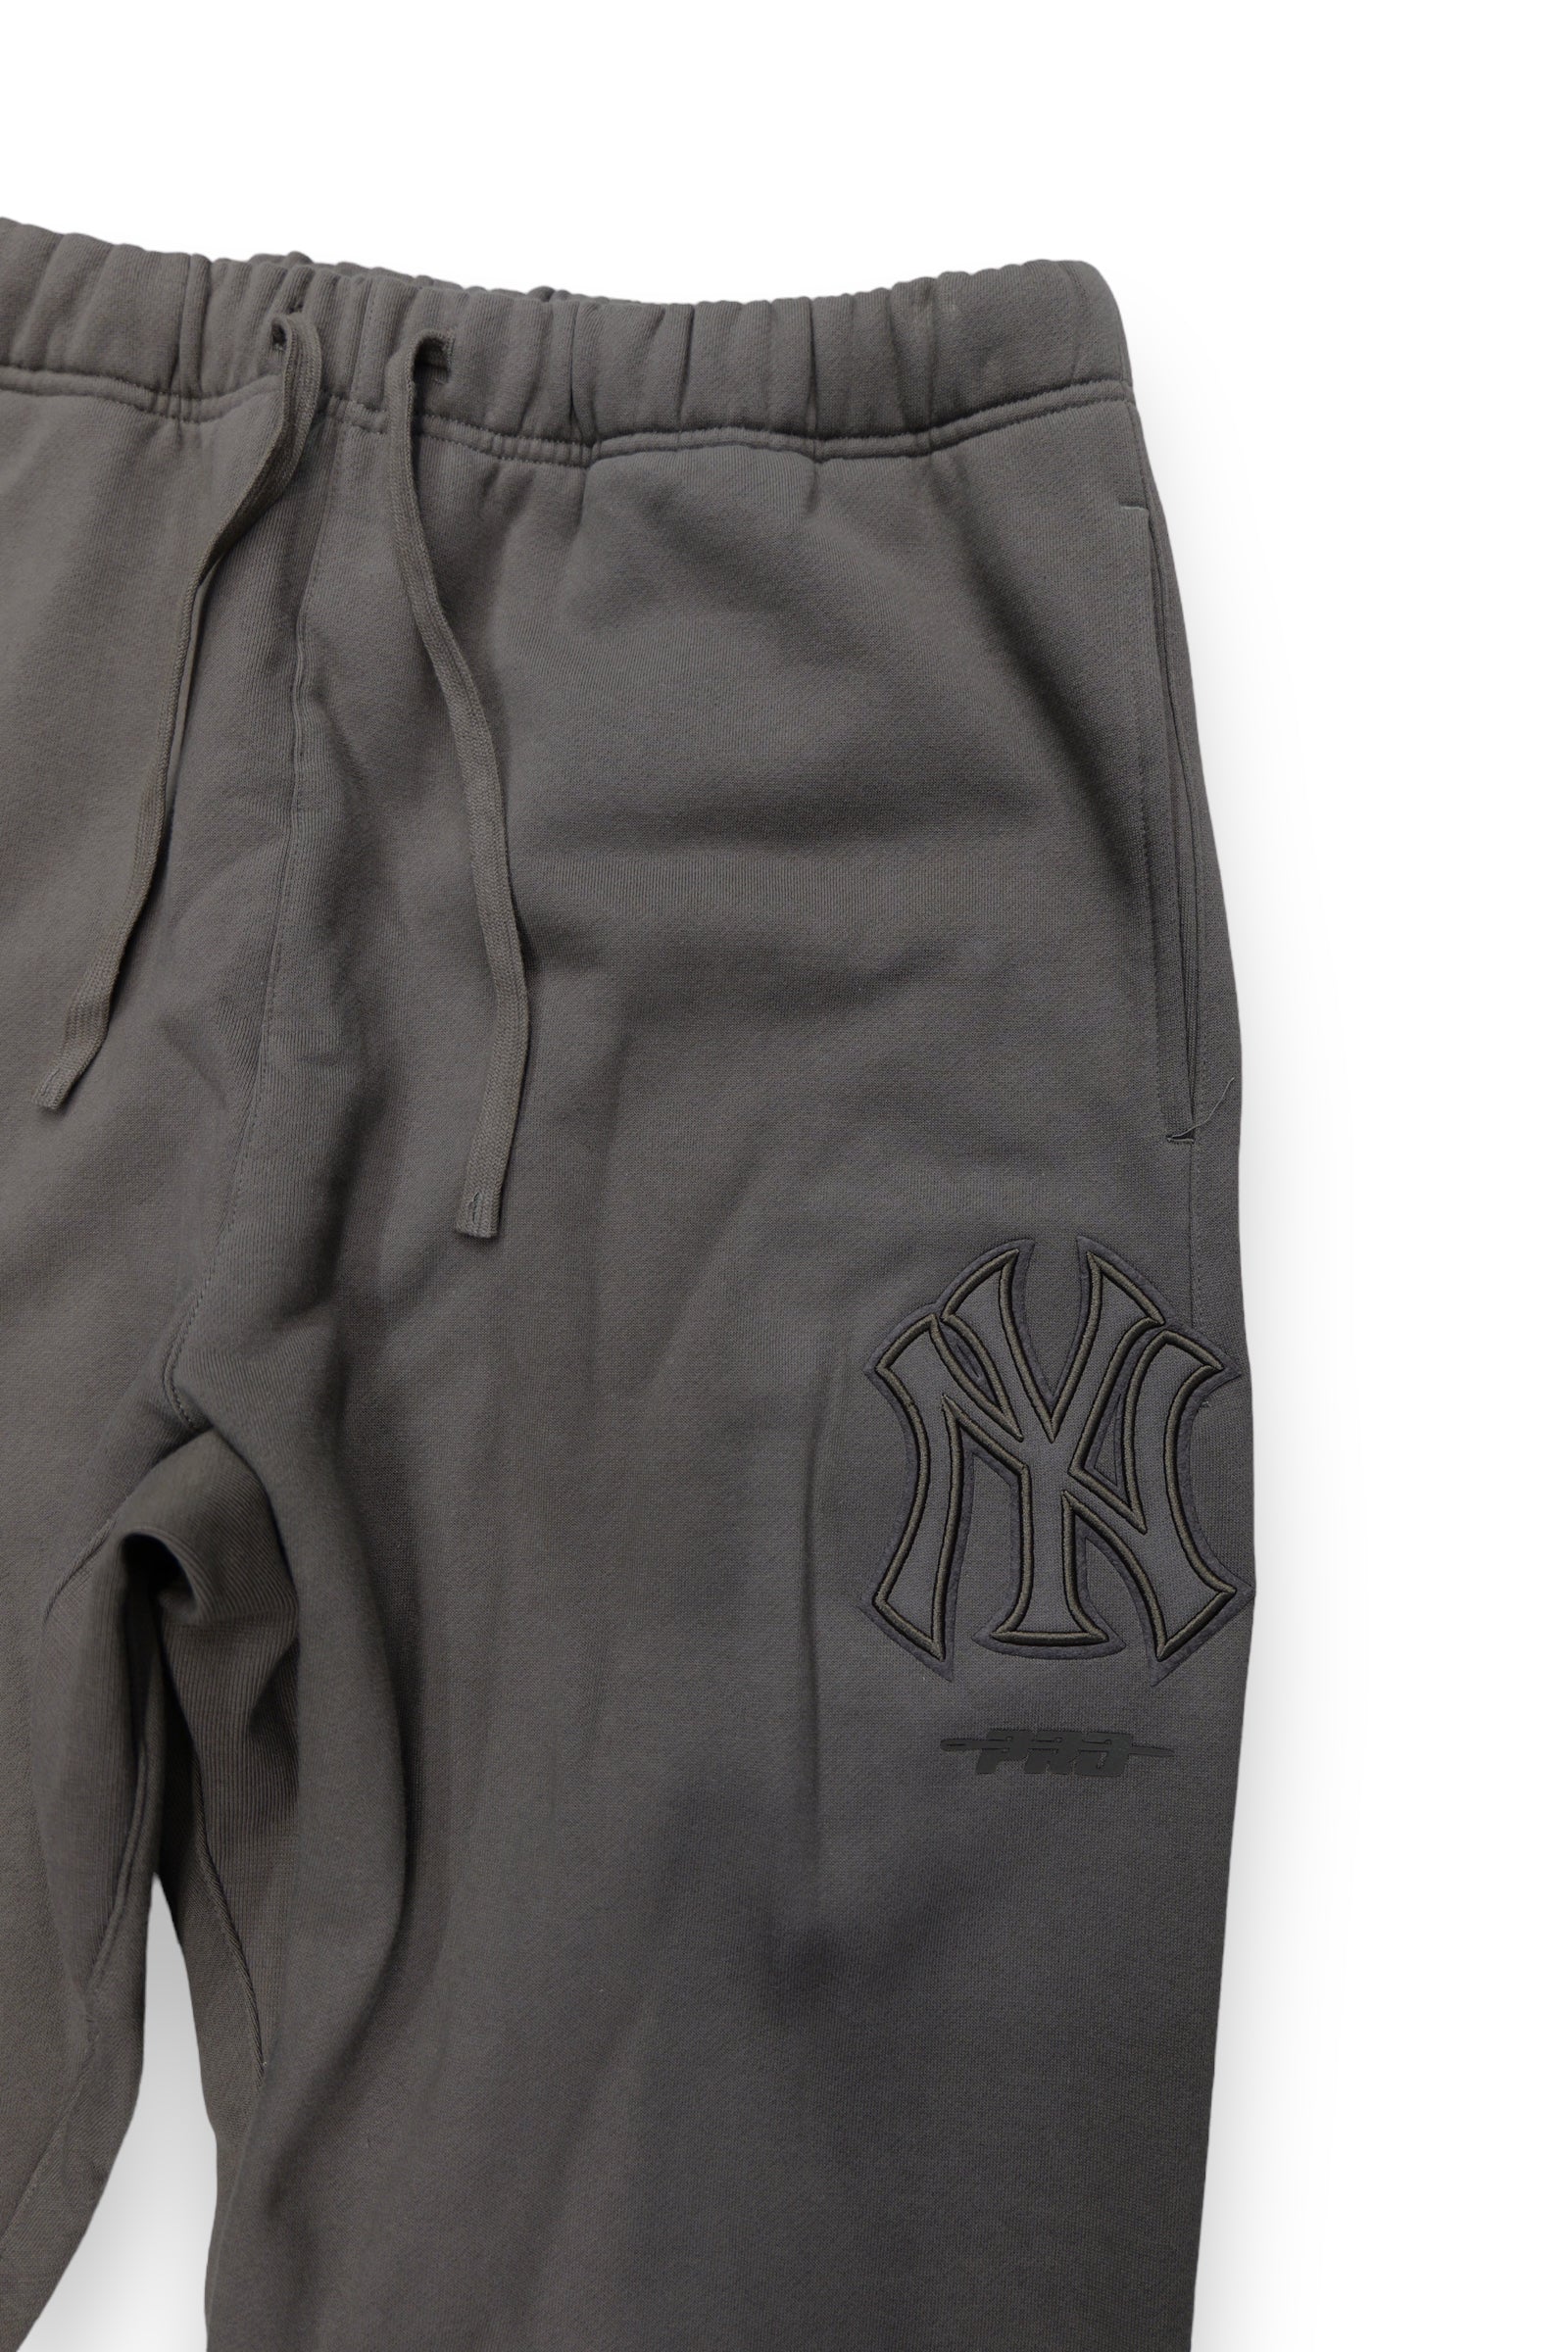 Pro Standard New York Yankees Sweatsuit (Dark Taupe)